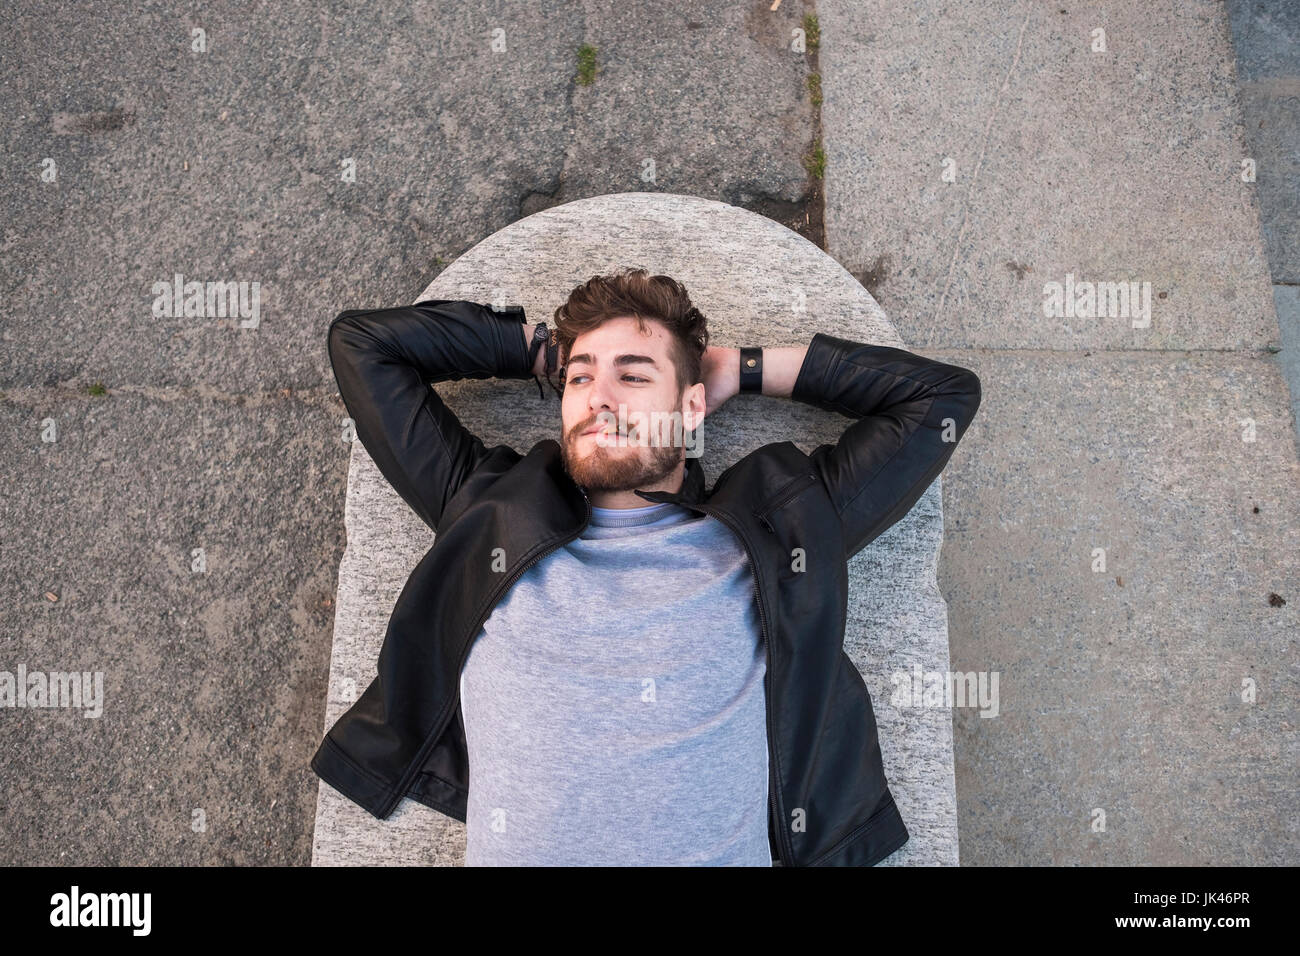 Caucasian man laying on concrete smoking cigarette Stock Photo